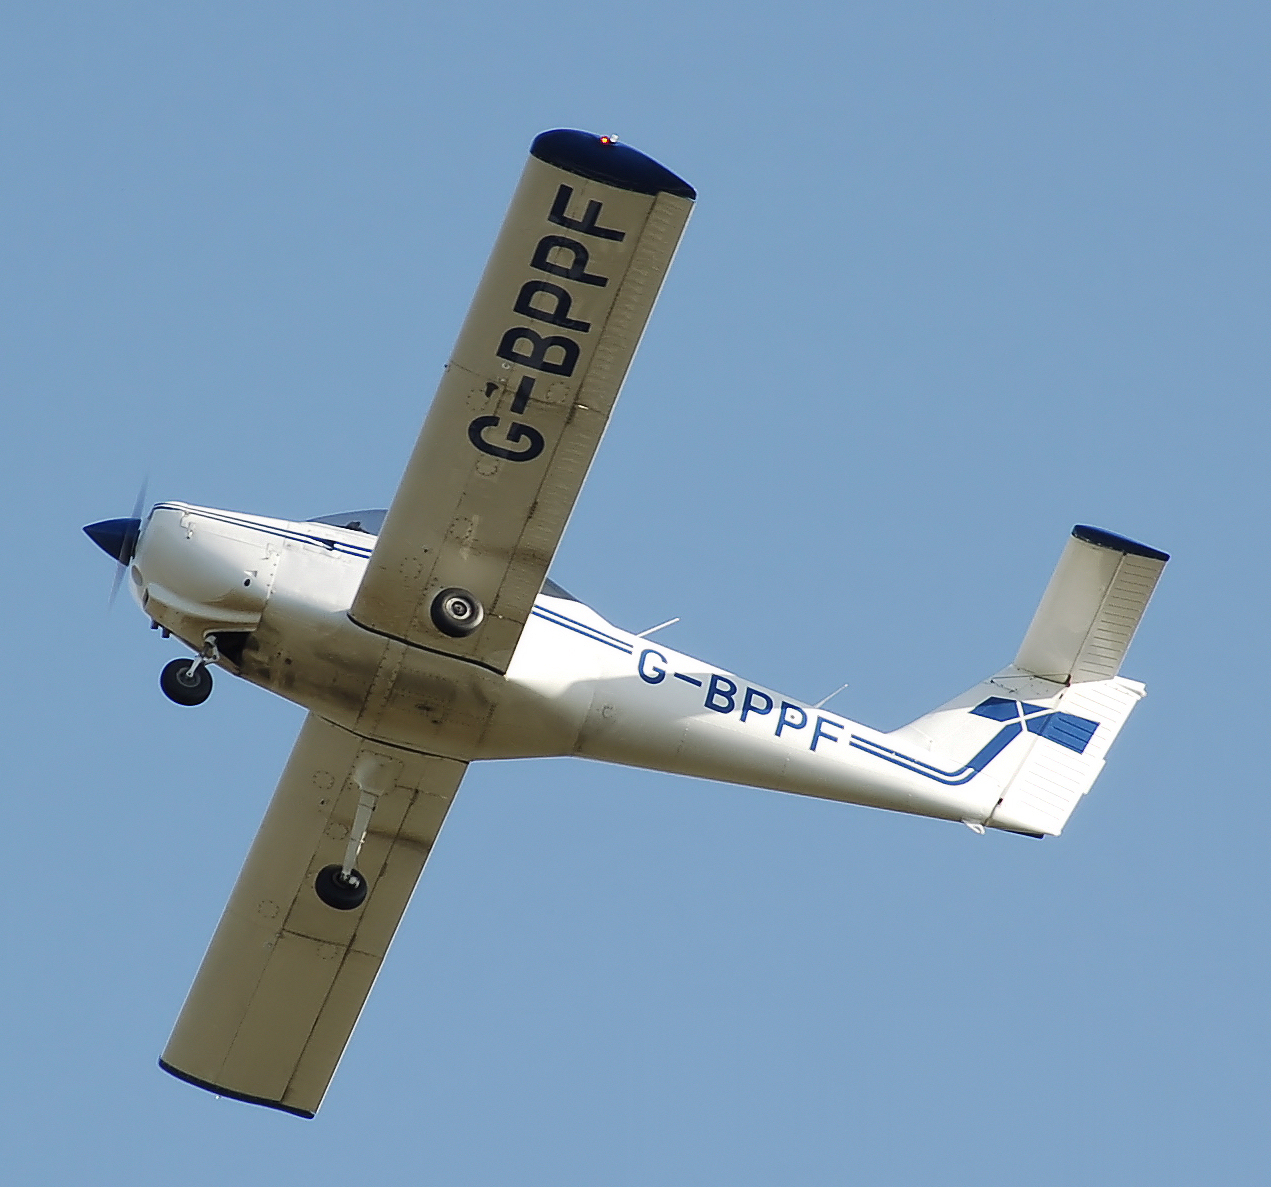 Piper PA-38 Tomahawk previous